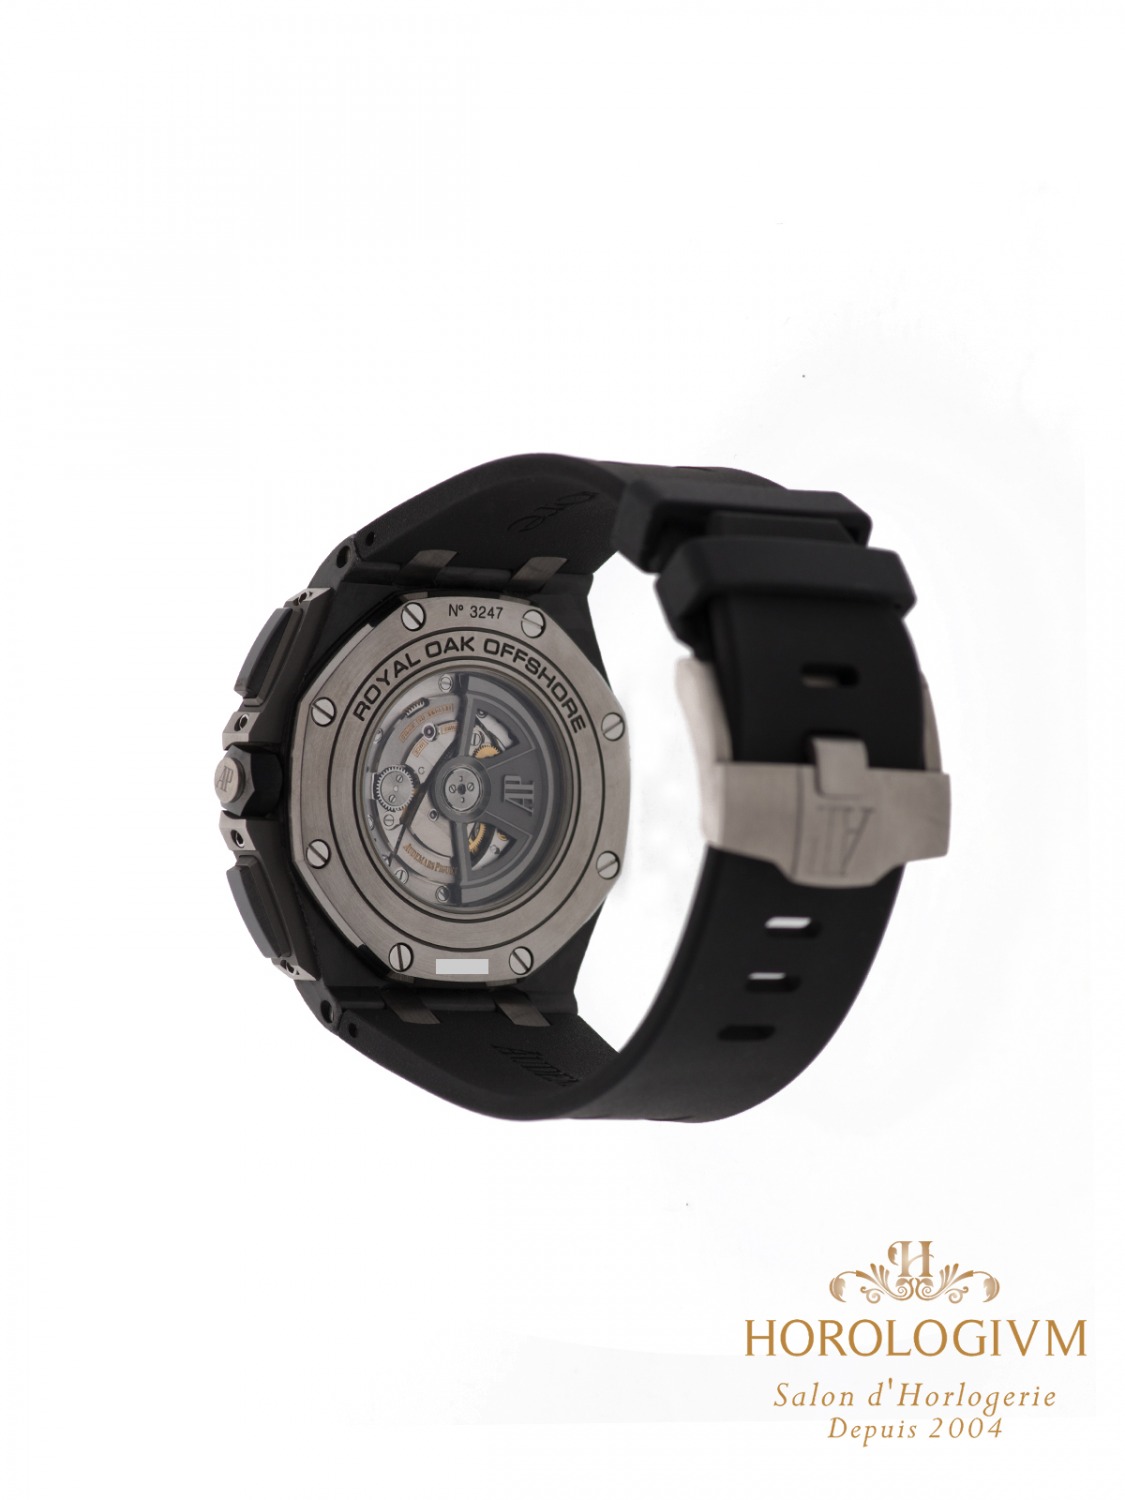 Audemars Piguet Royal Oak Offshore Chronograph 44MM REF. 26400AU.OO.A002CA.01 watch, black cearamic